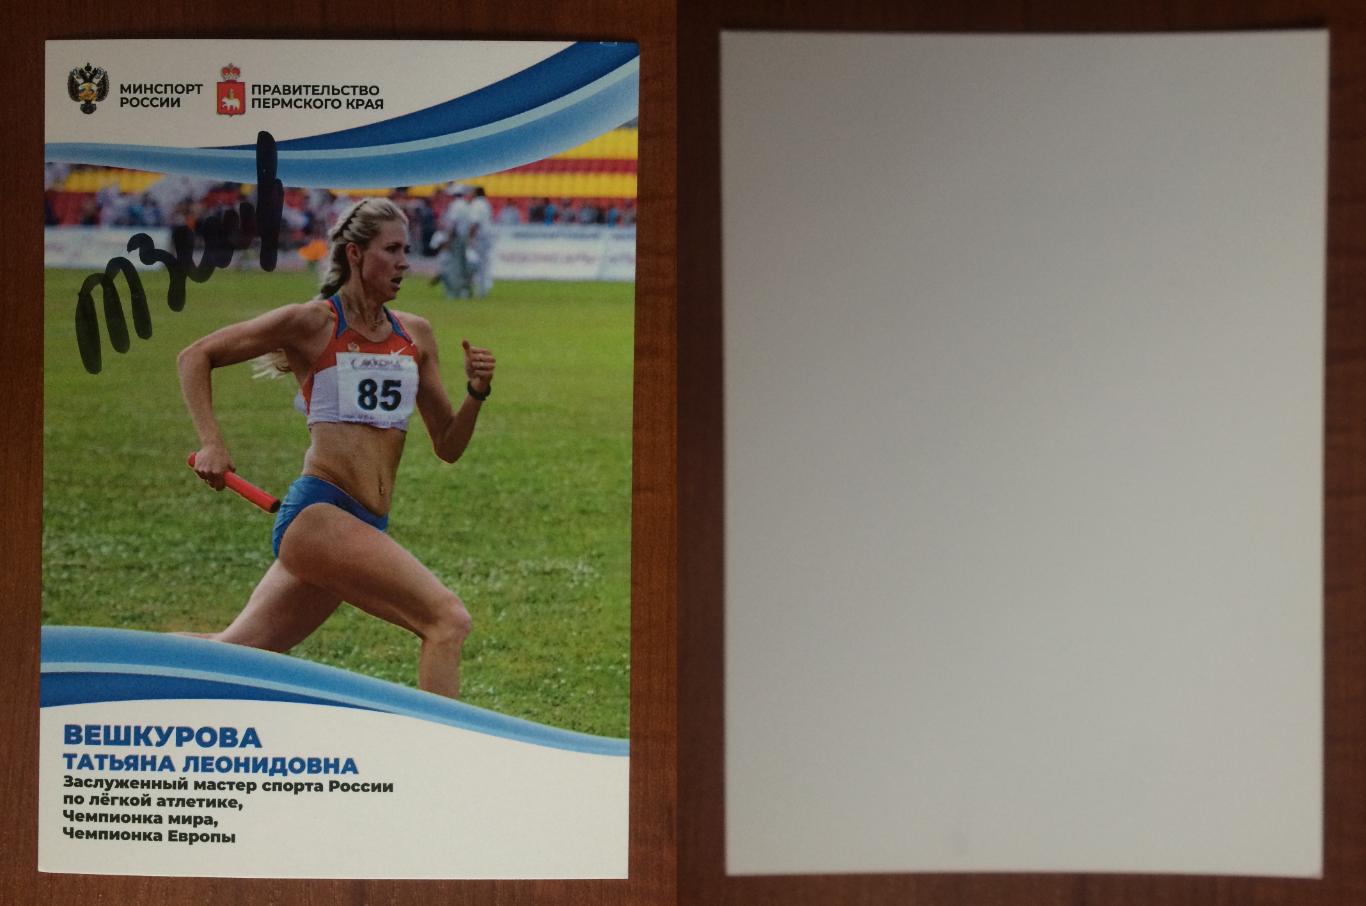 Автограф Татьяна Вешкурова легкая атлетика Олимпиада серебро 2008 год